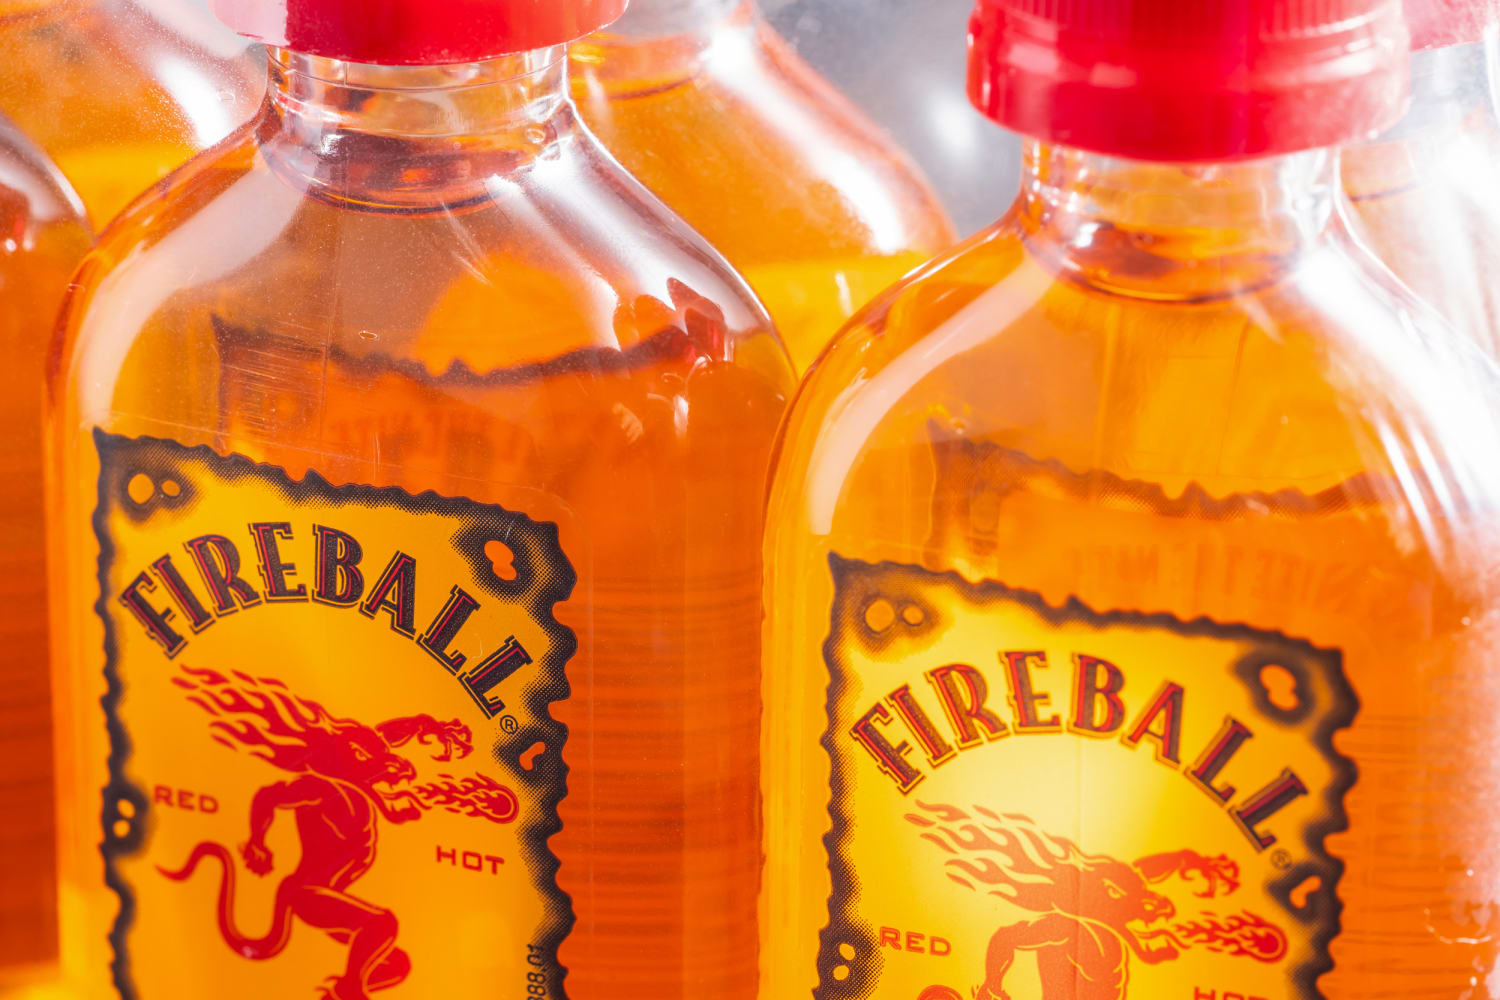 Fireball whisky-maker accused of false advertising on miniature drink bottles